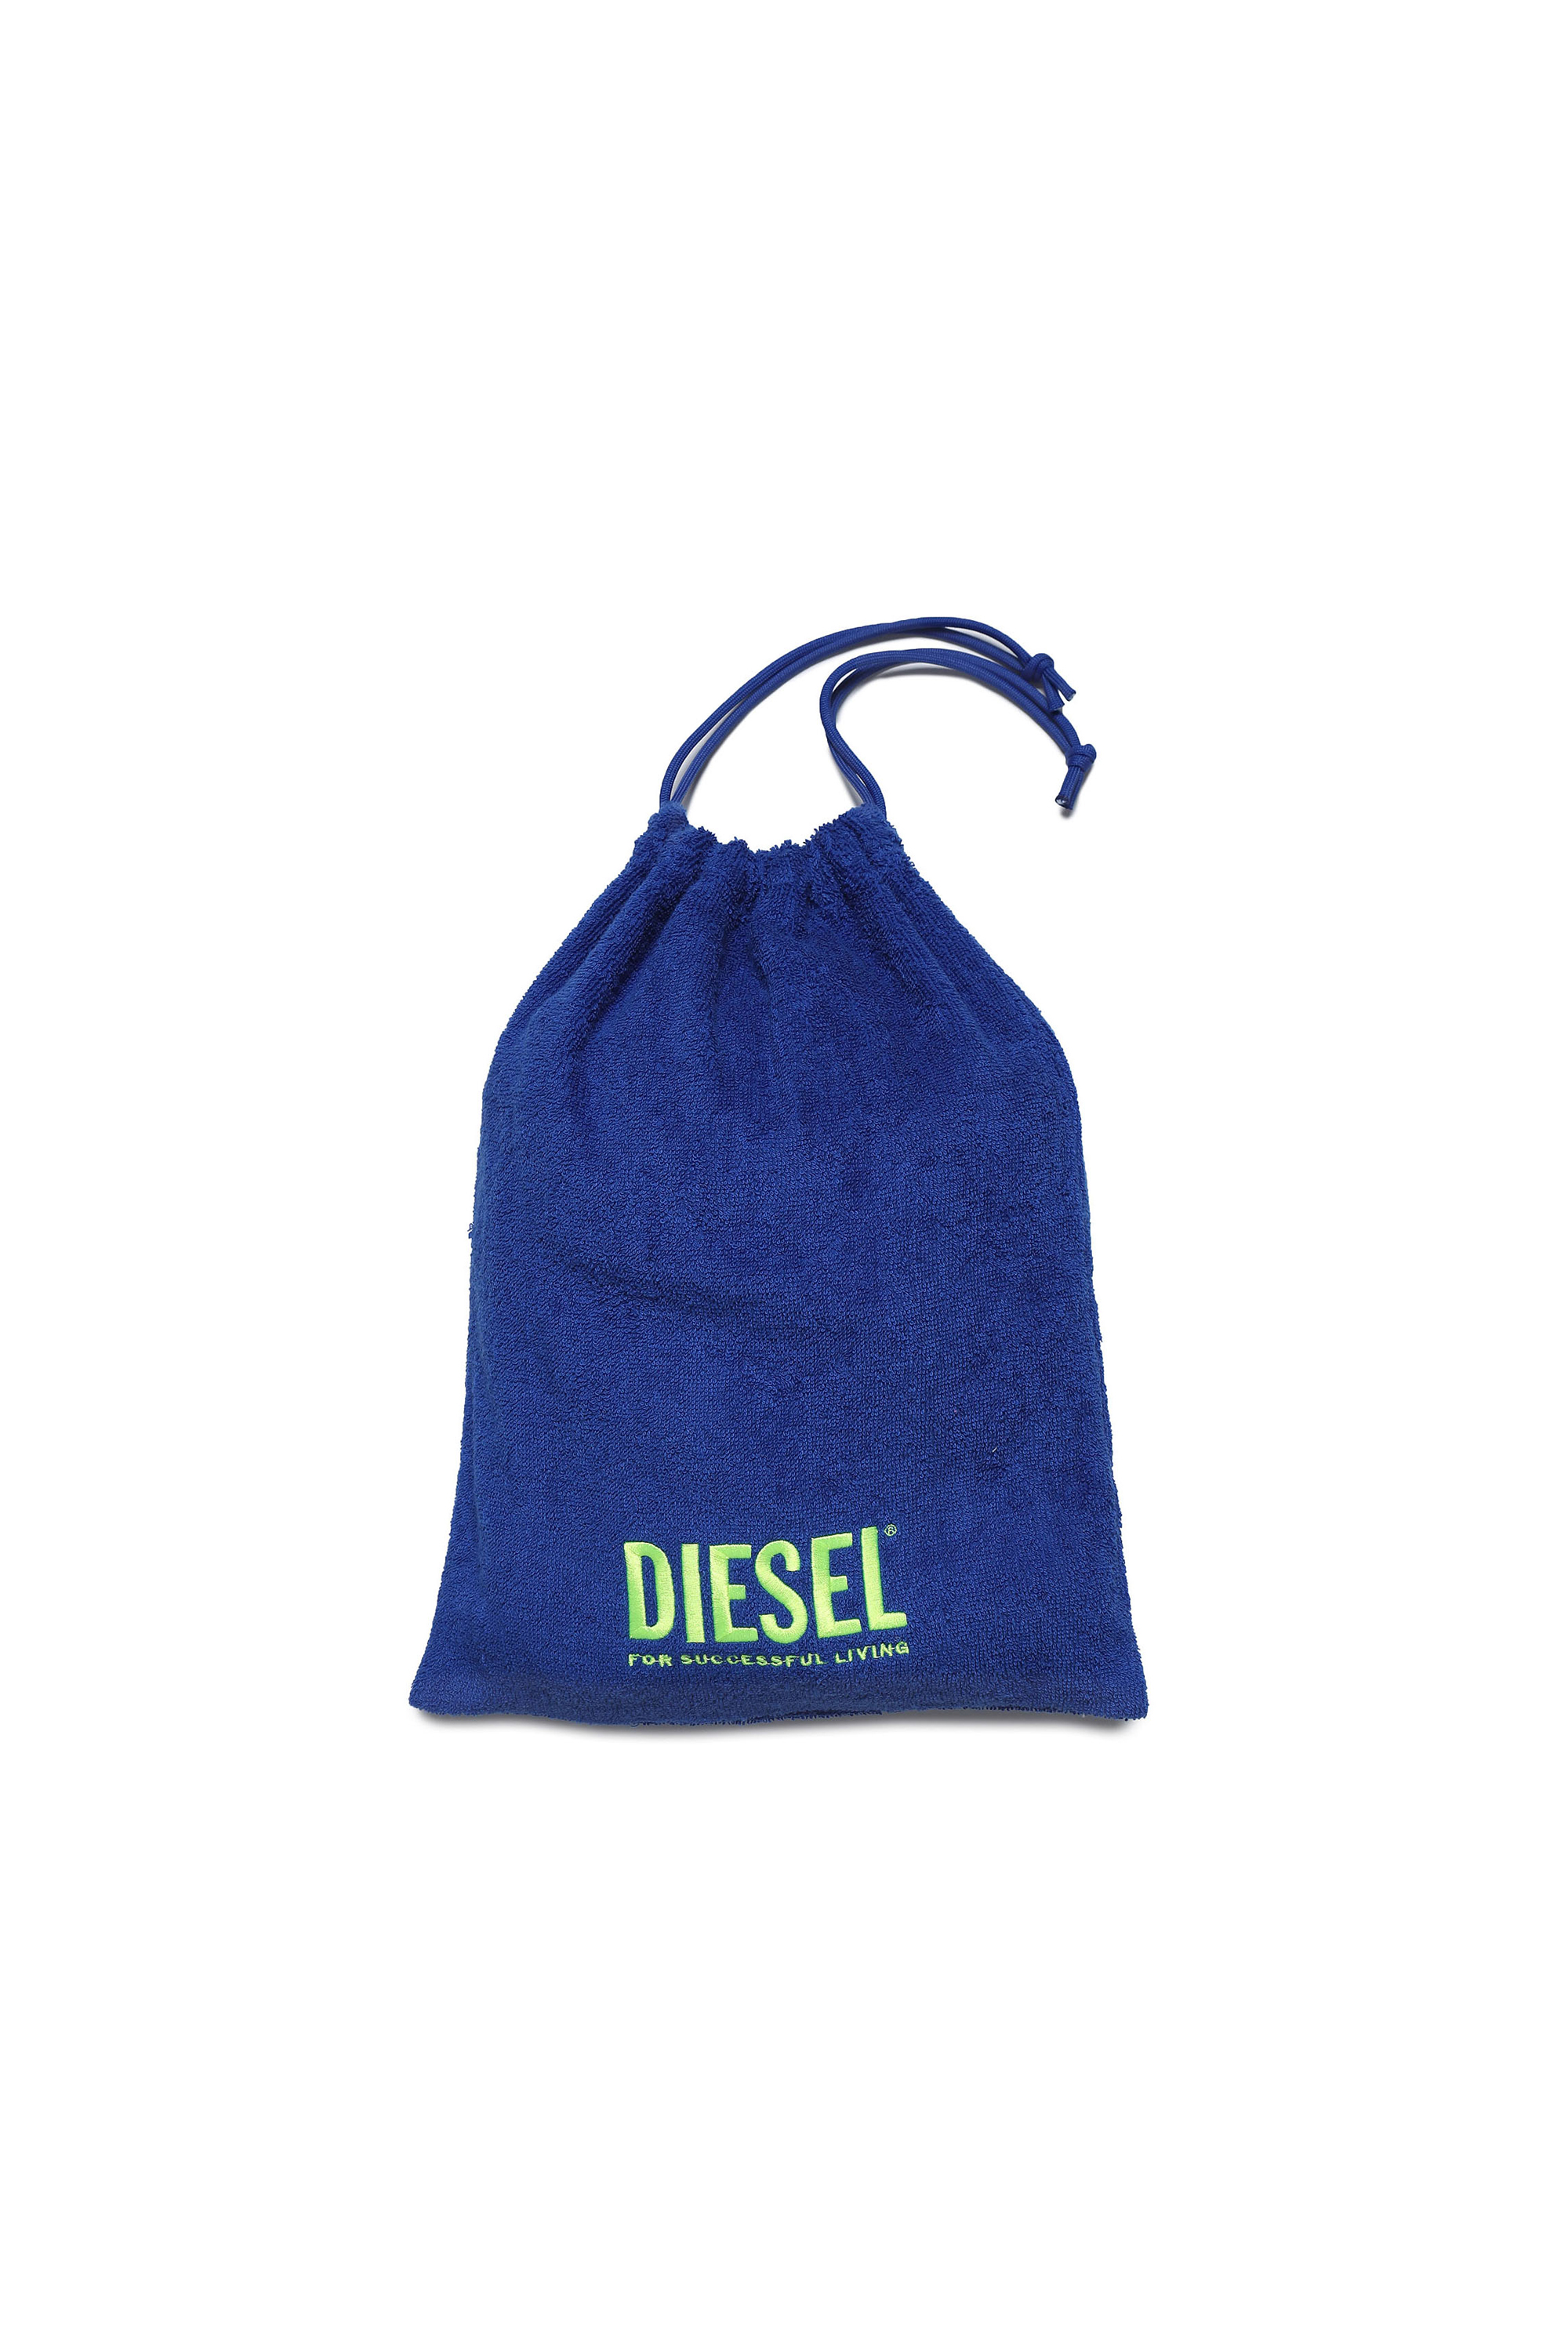 Diesel - MANDRYB, Blau - Image 3